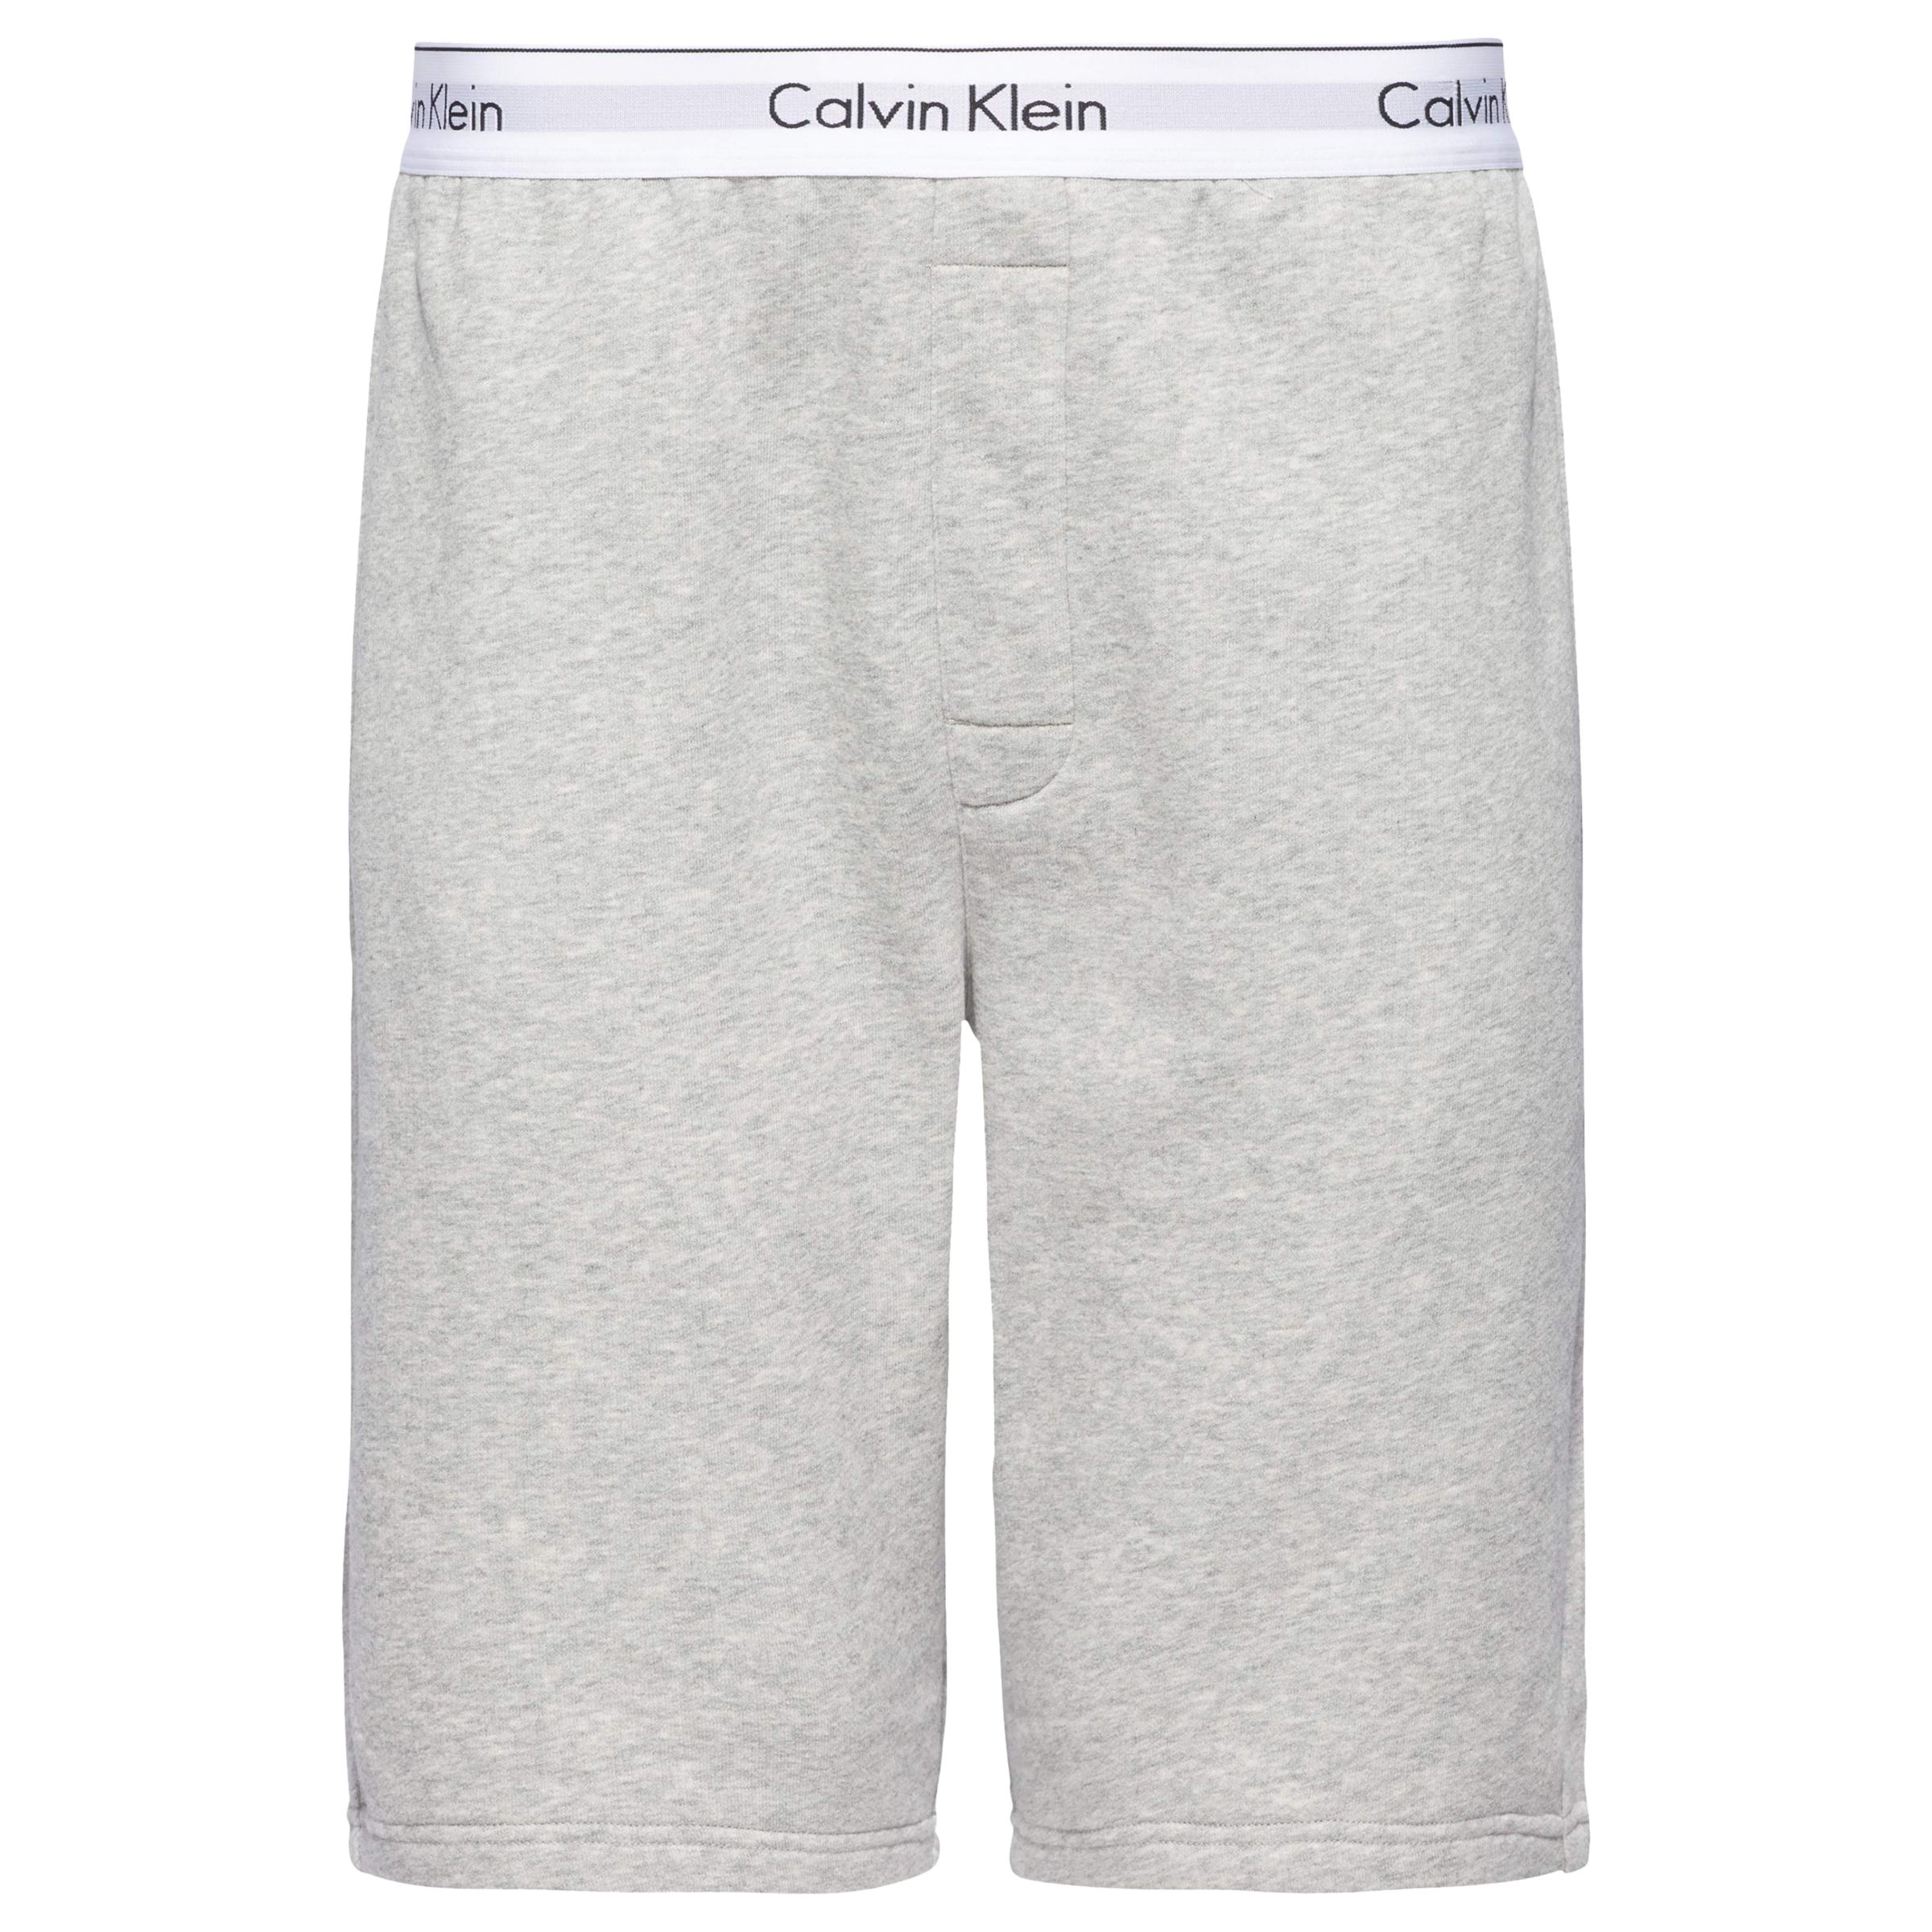 calvin klein pyjama shorts mens